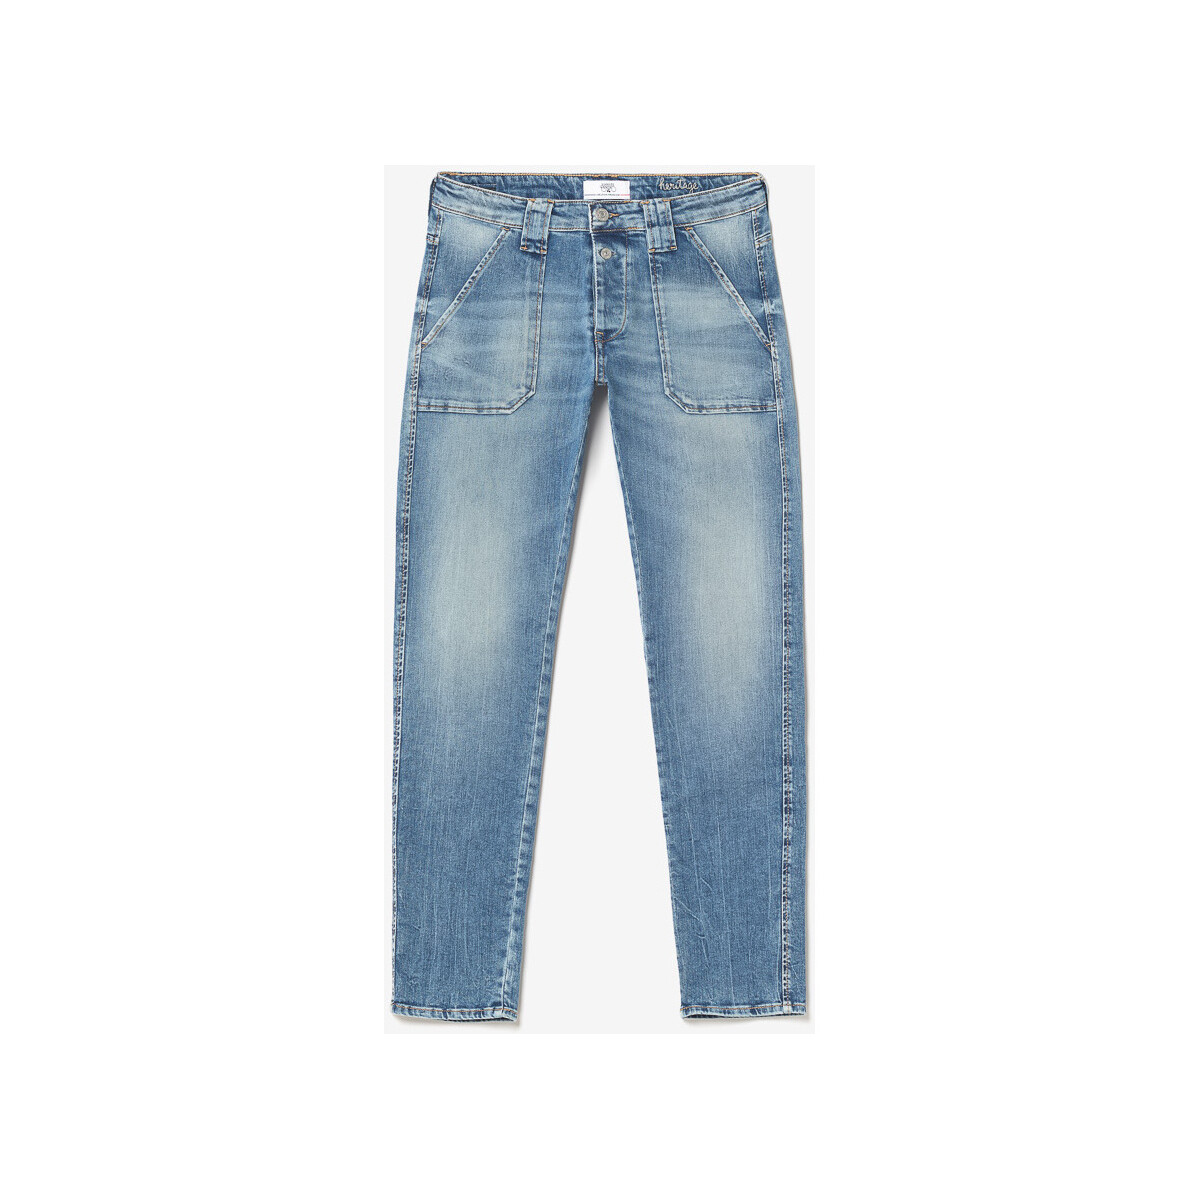 Le Temps des Cerises Bleu Cara 200/43 boyfit jeans bleu